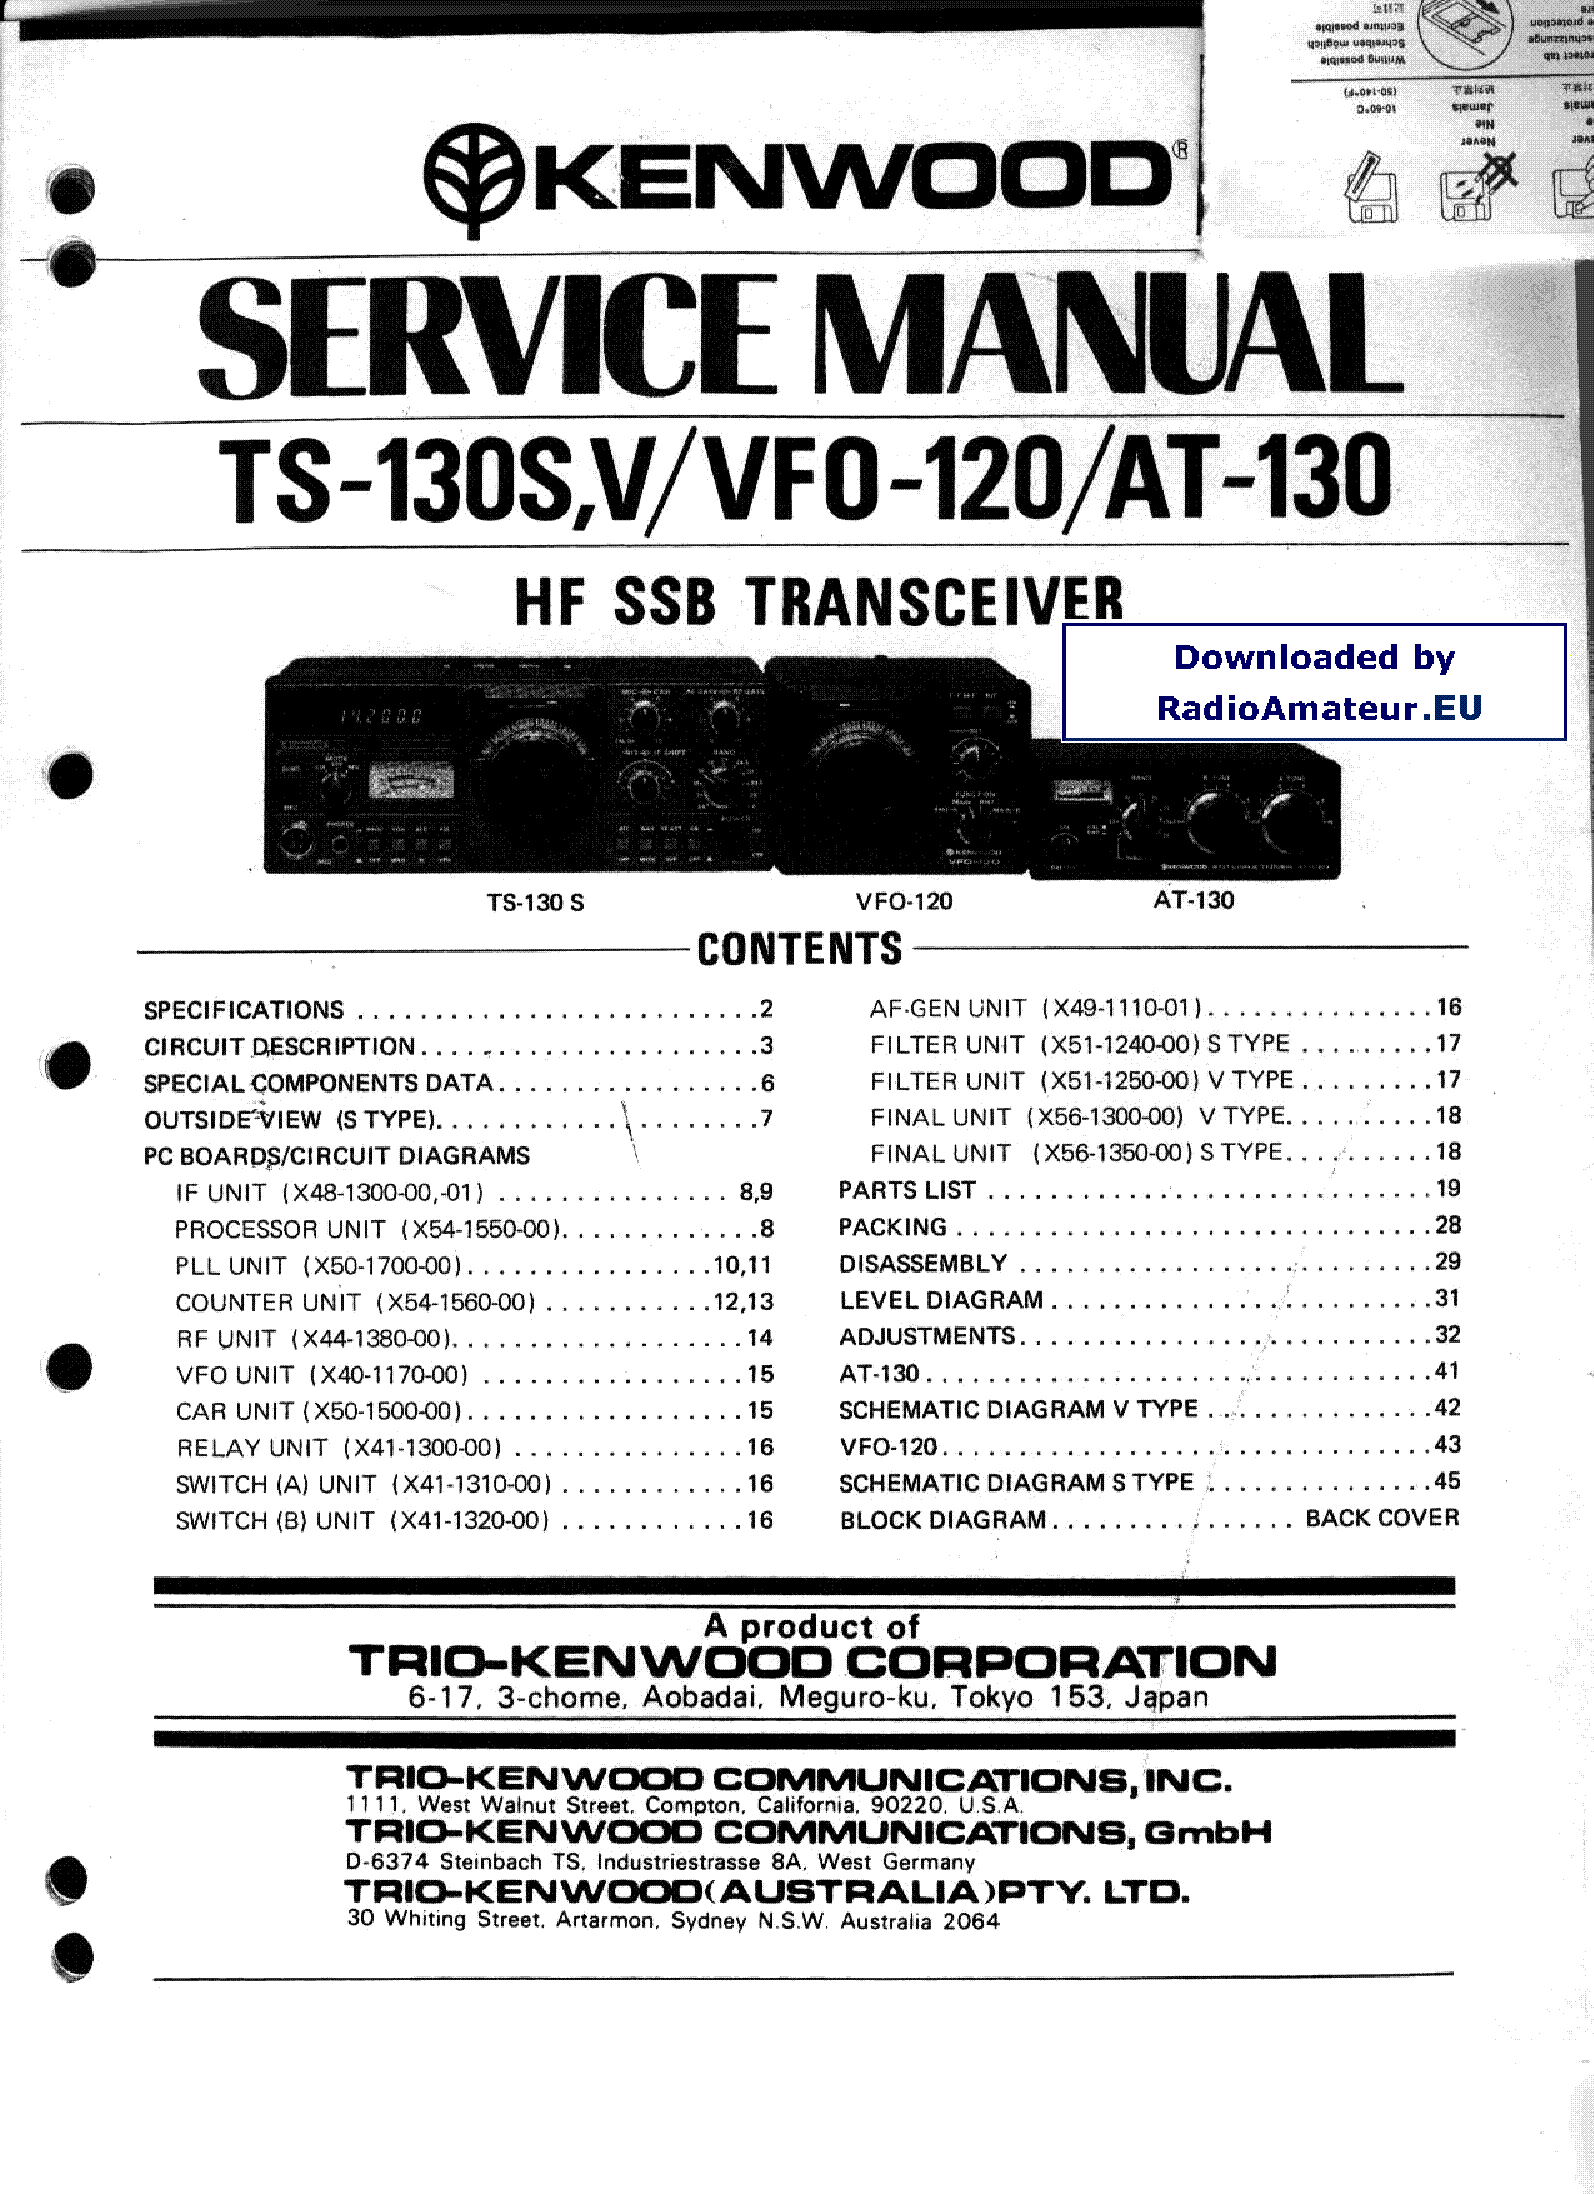 KENWOOD TS130 service manual (1st page)